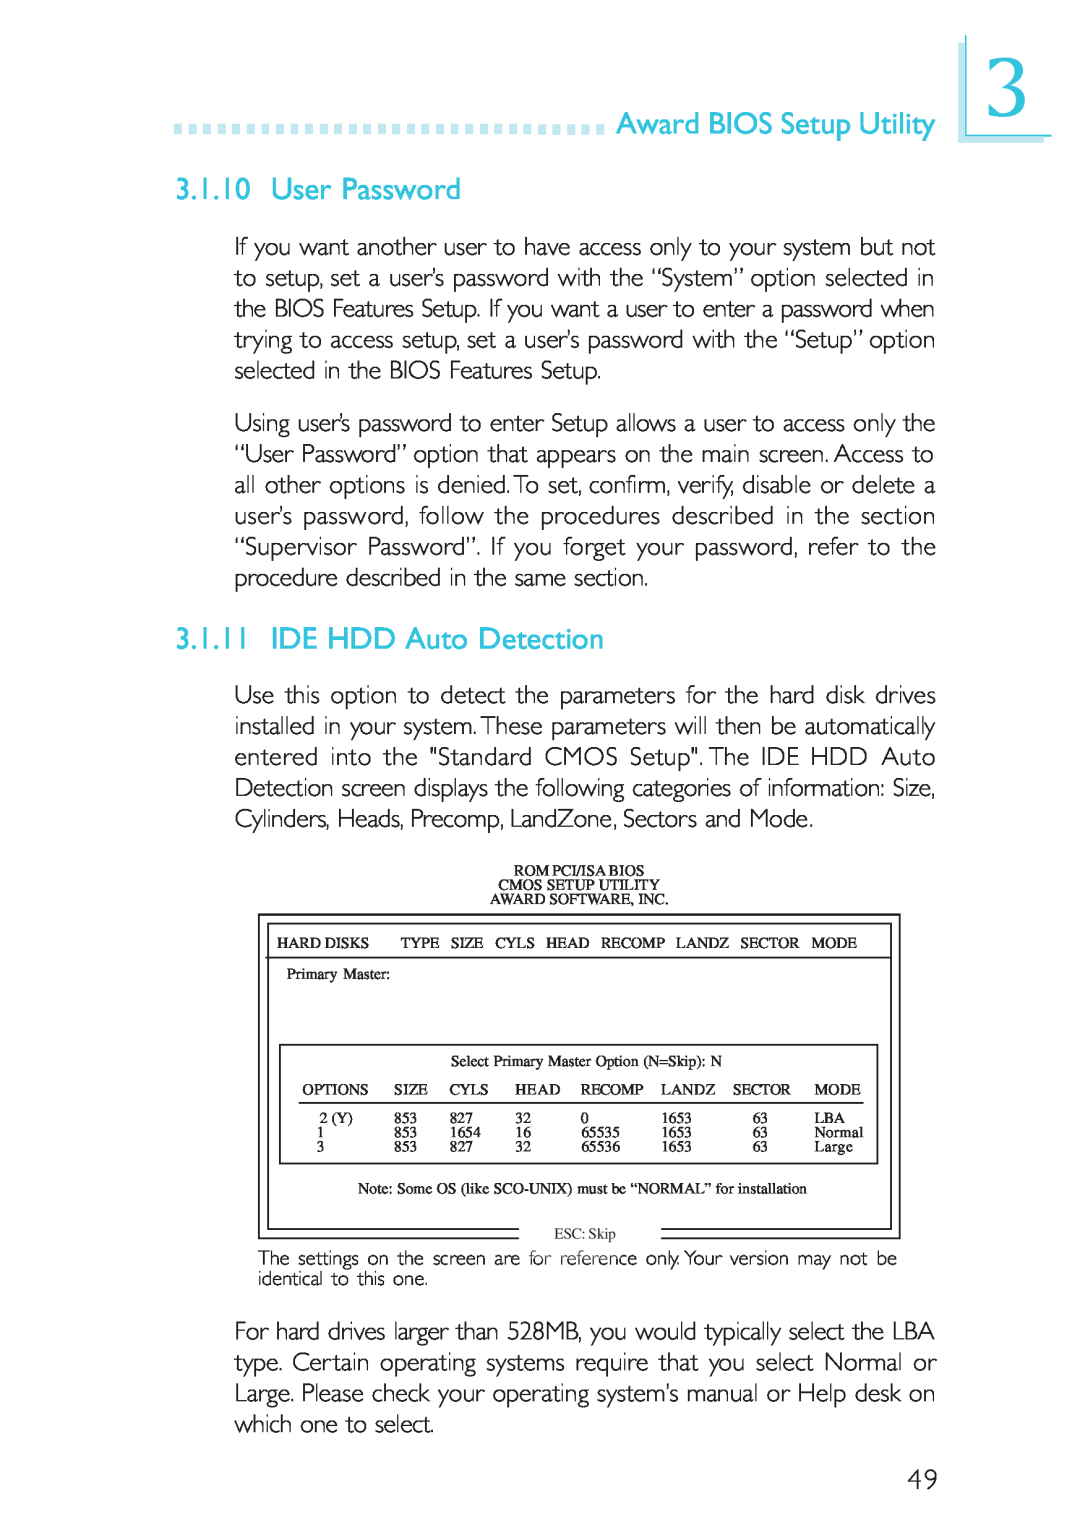 Intel CB60-ZX, CB60-BX manual Award BIOS Setup Utility 3.1.10 User Password, IDE HDD Auto Detection 